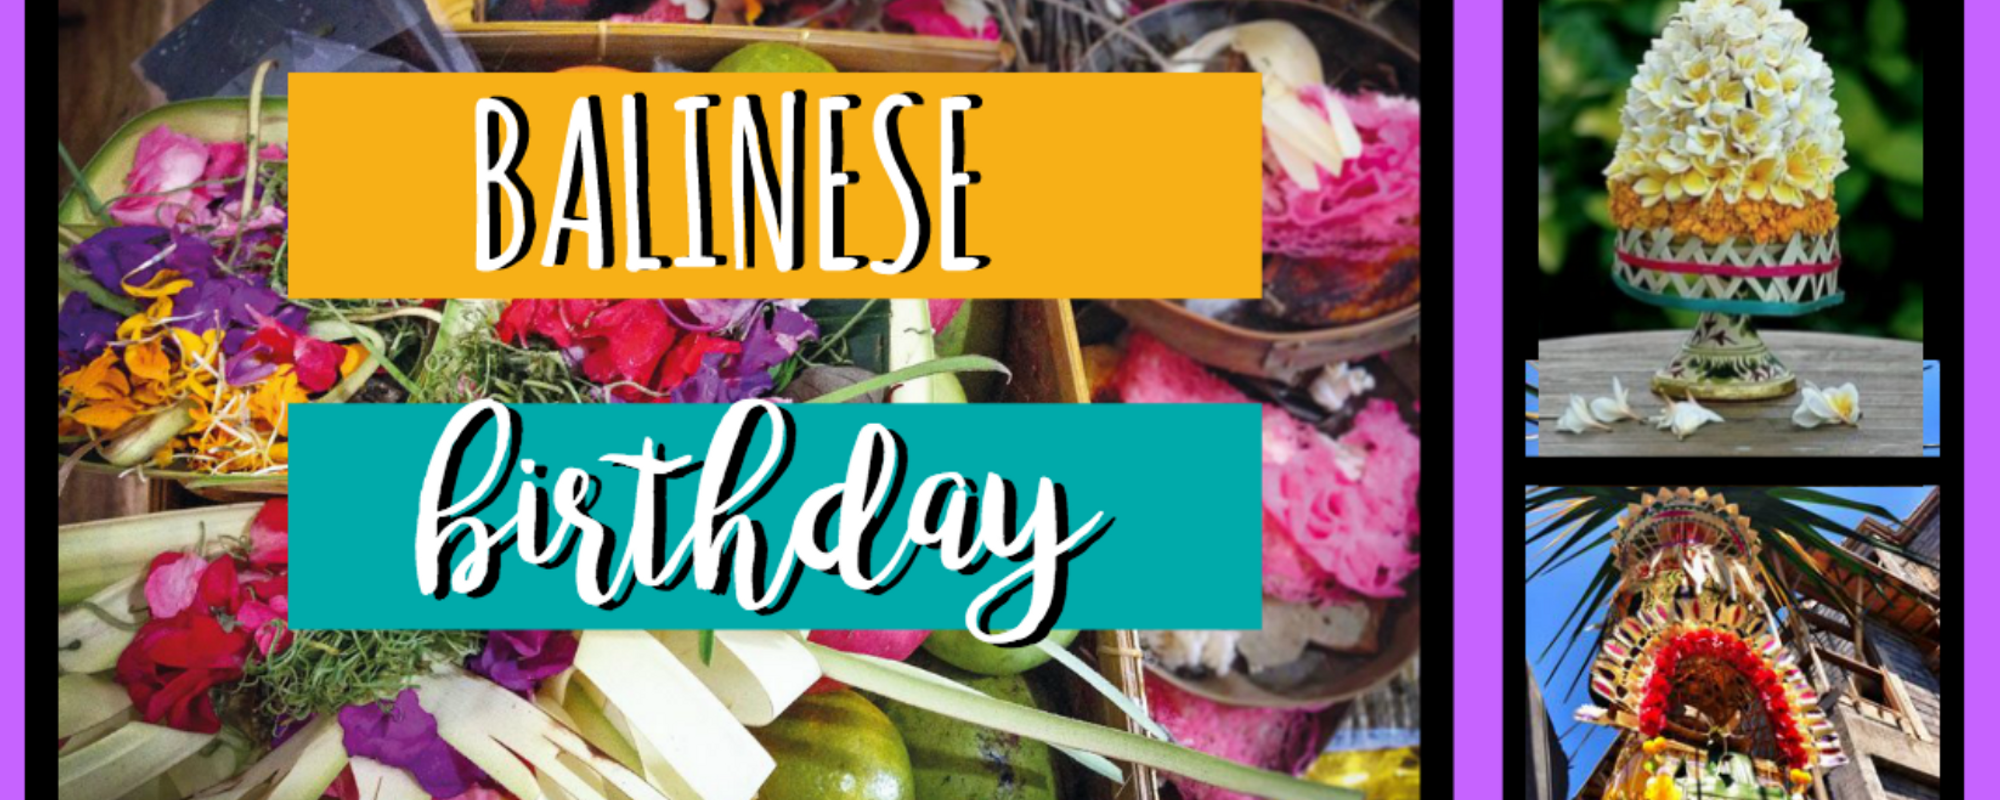 Balinese People Get Two Birthdays